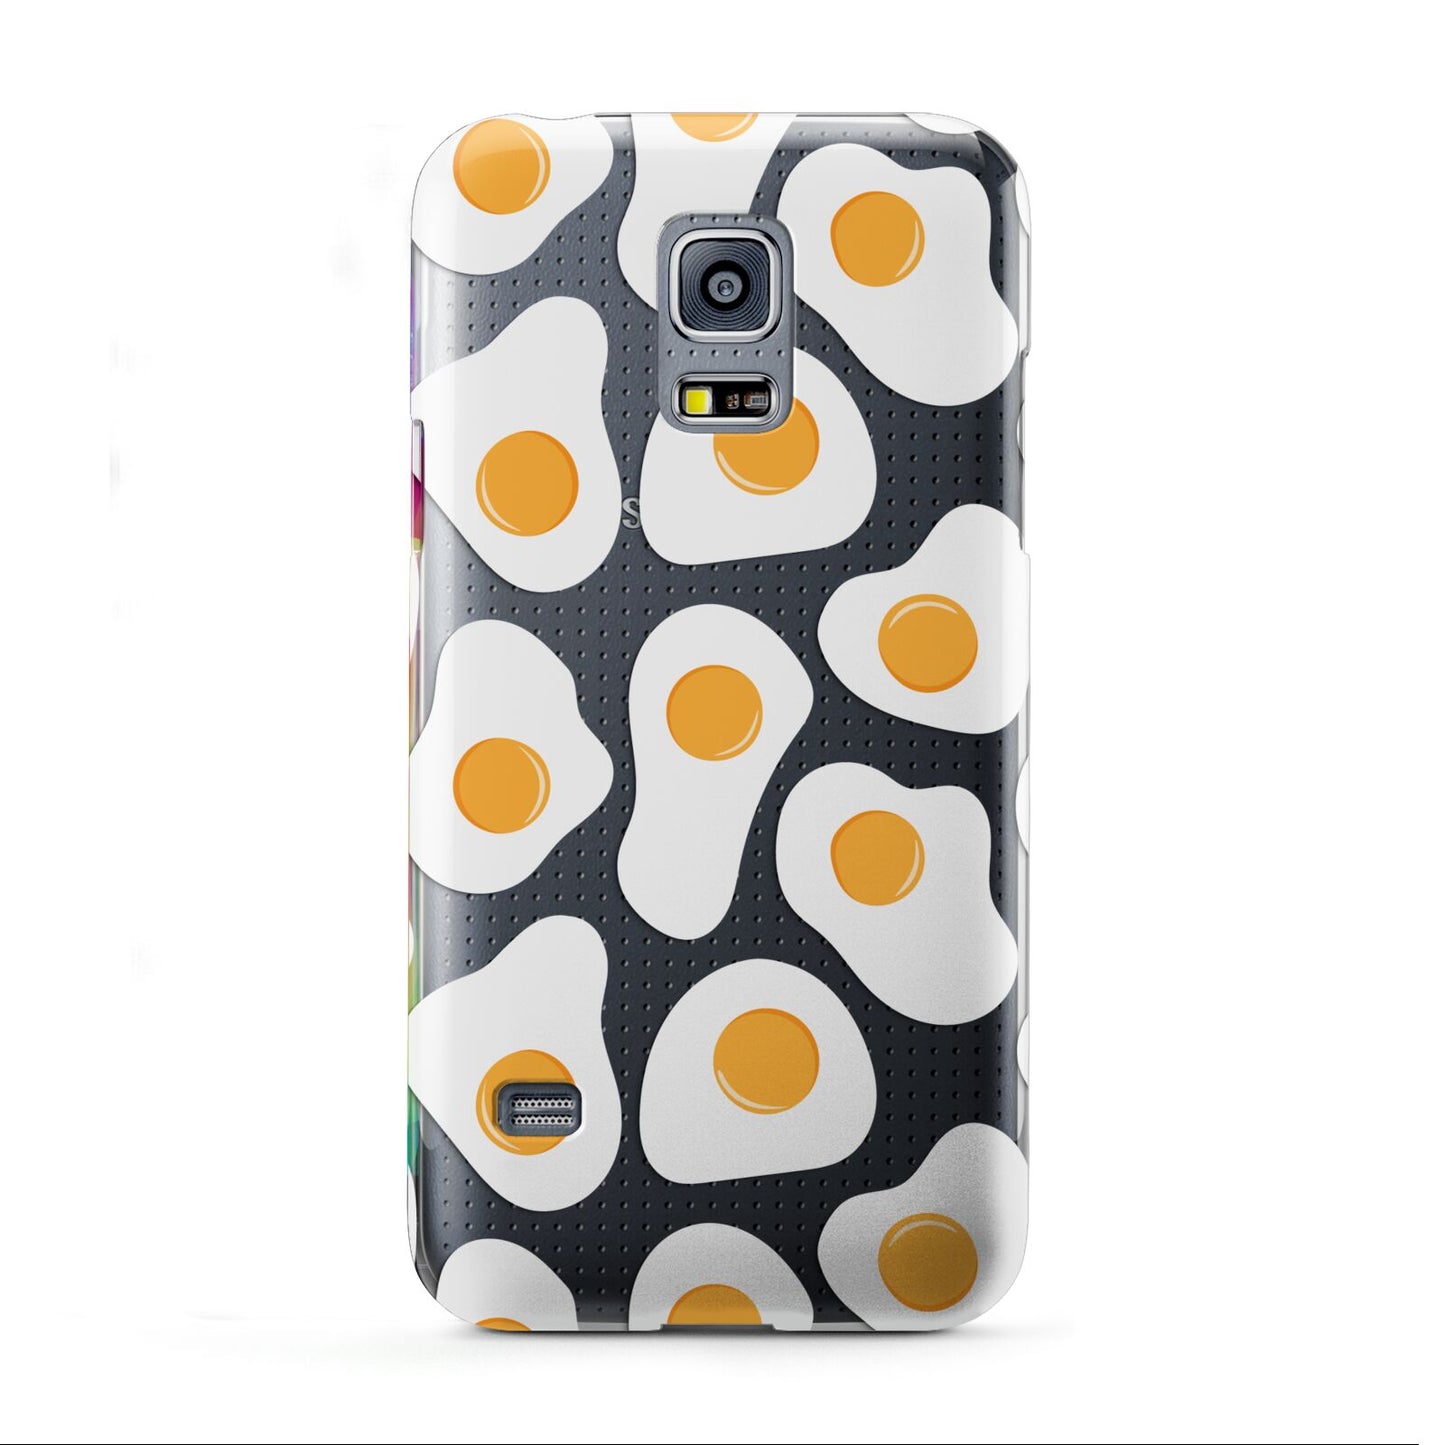 Fried Egg Samsung Galaxy S5 Mini Case